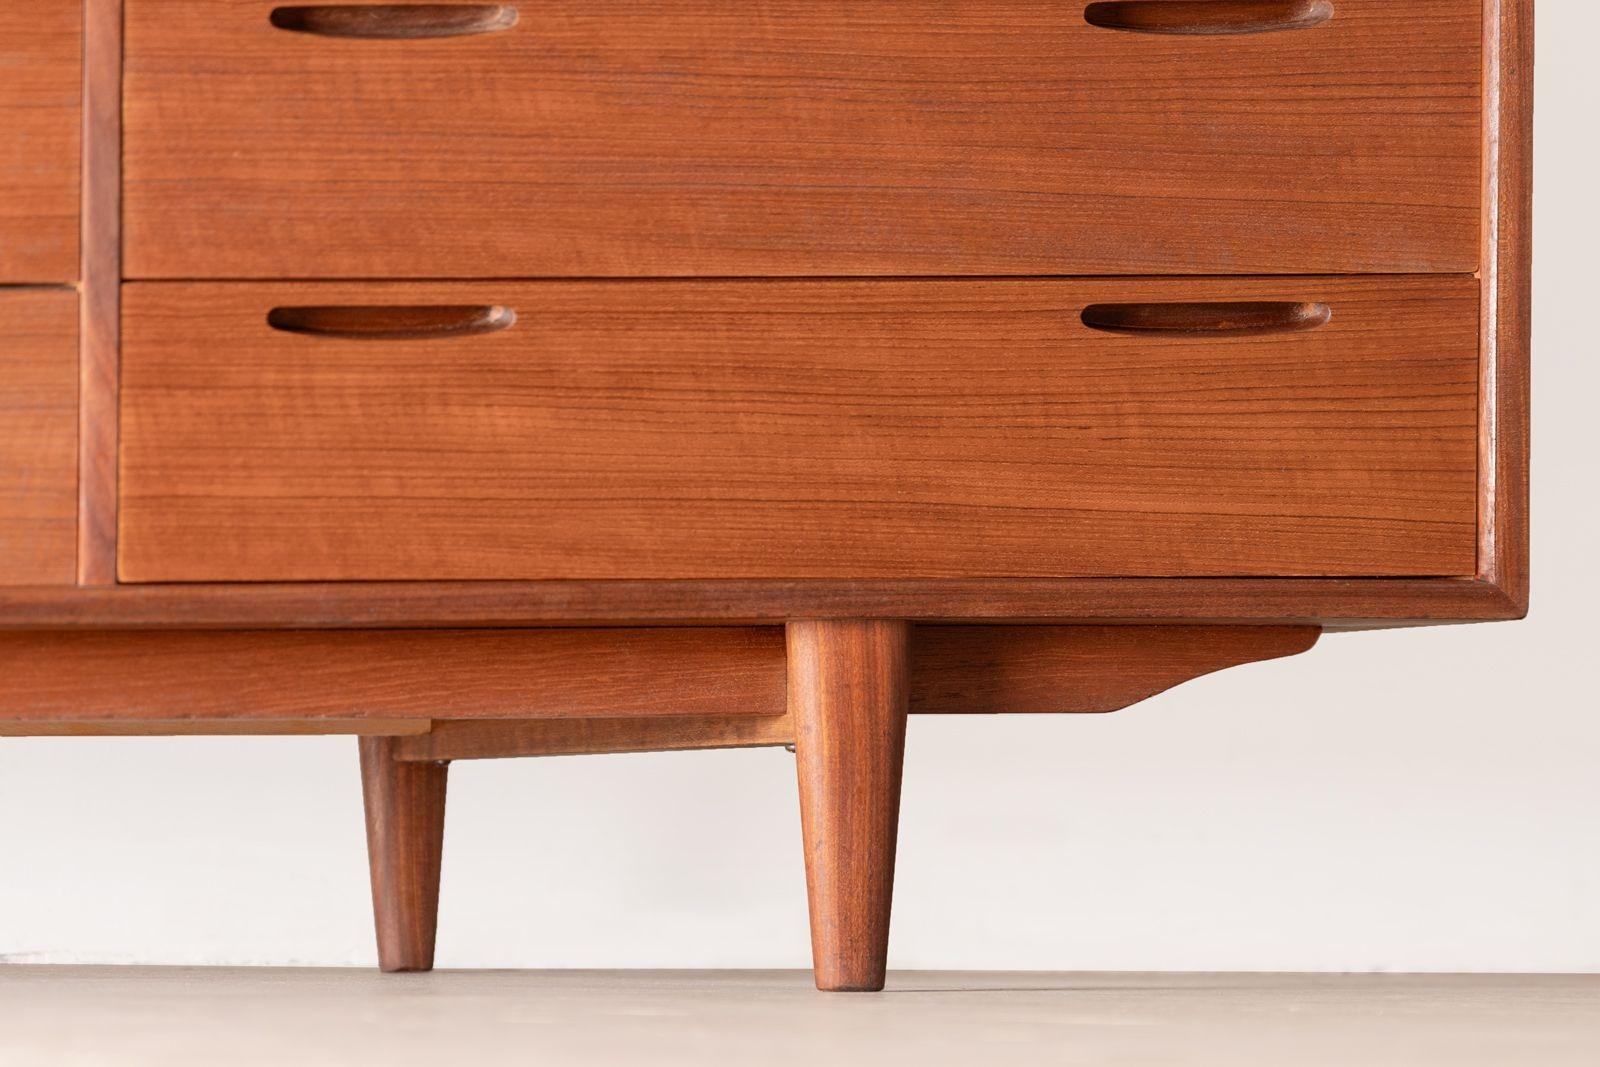 Ib Kofod Larsen Danish Modern Twelve Drawer Dresser in Teak 1960s For Sale 3